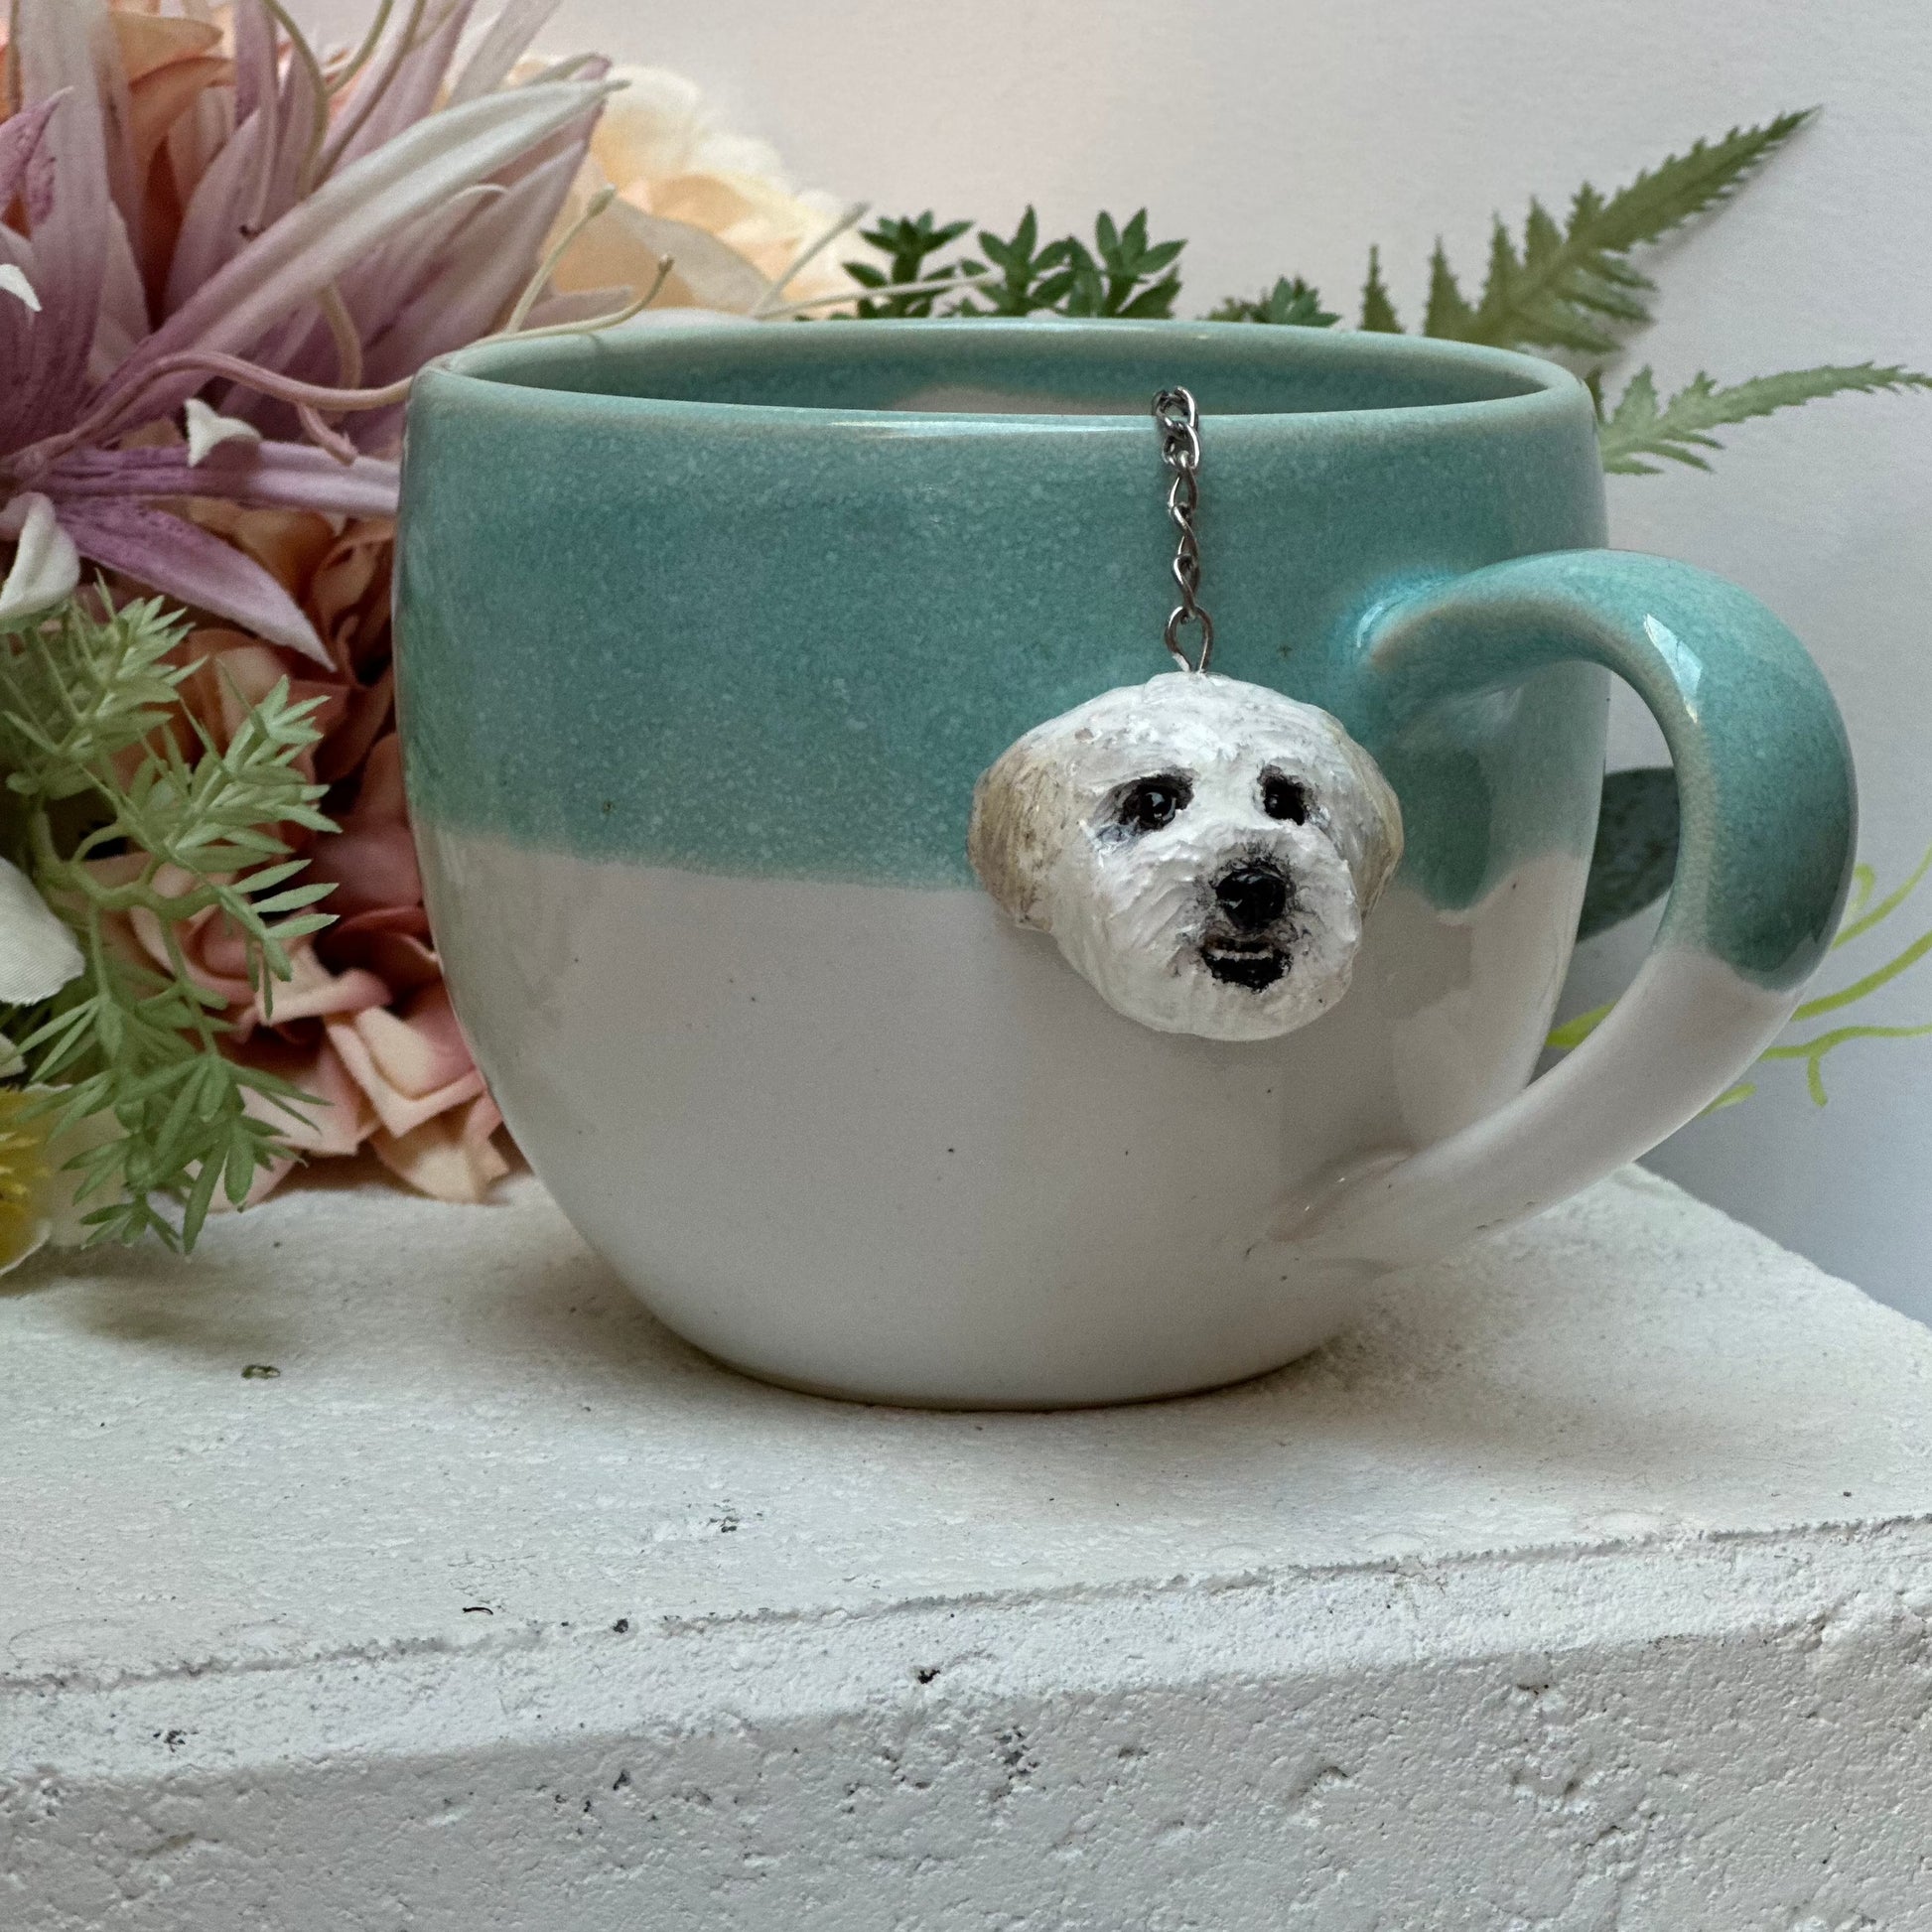 Handmade custom pet face mesh ball tea strainer being used in a teal mug.